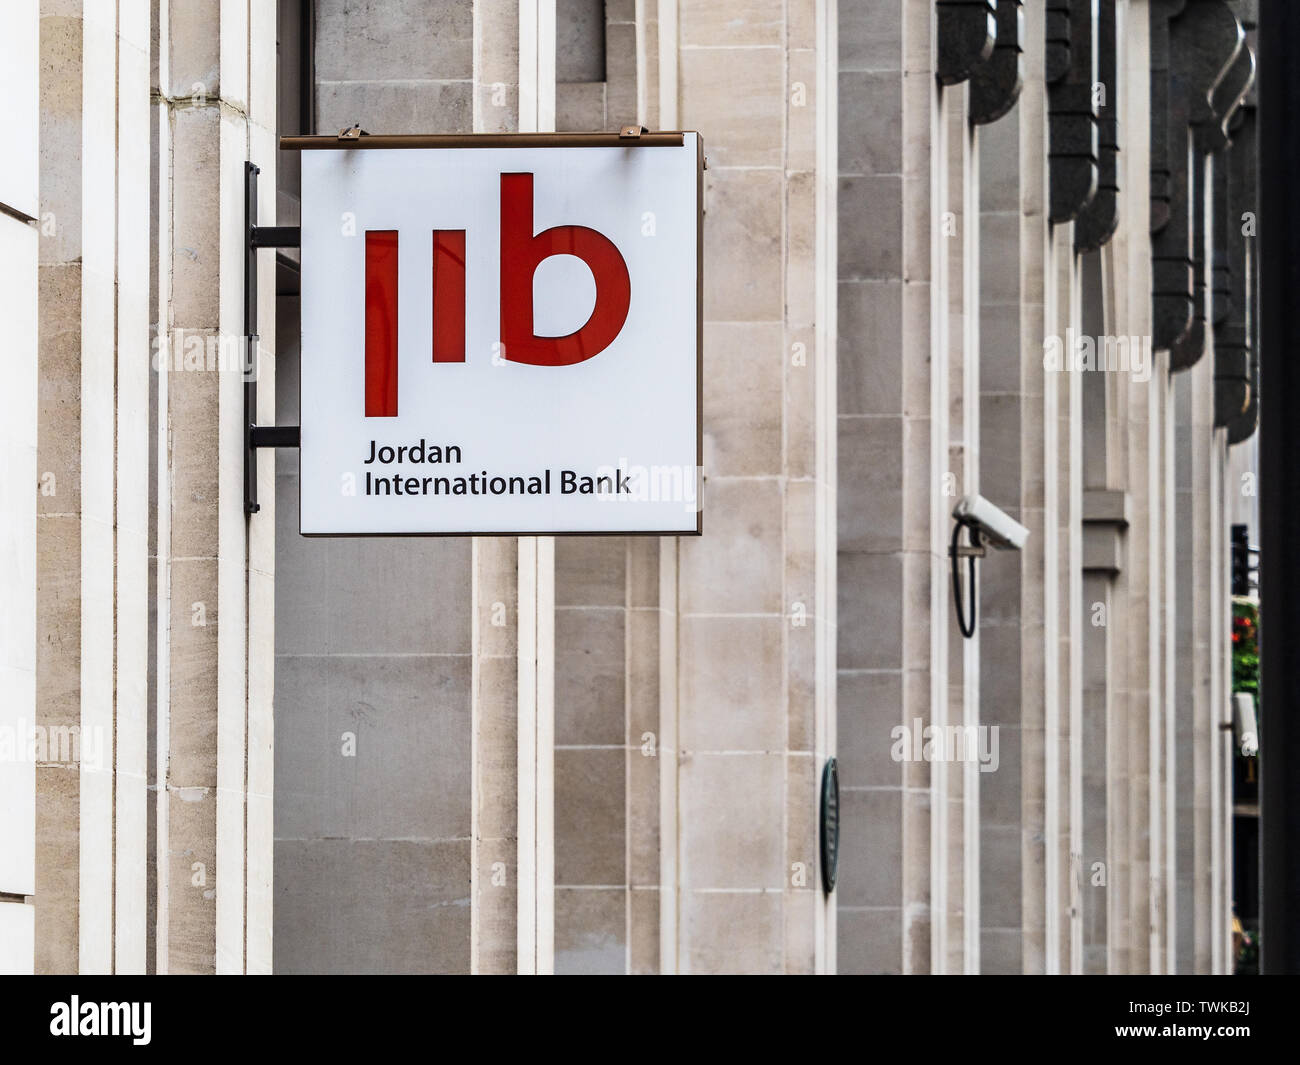 JIB Jordan International Bank in King Street, St James's in Central London Stock Photo